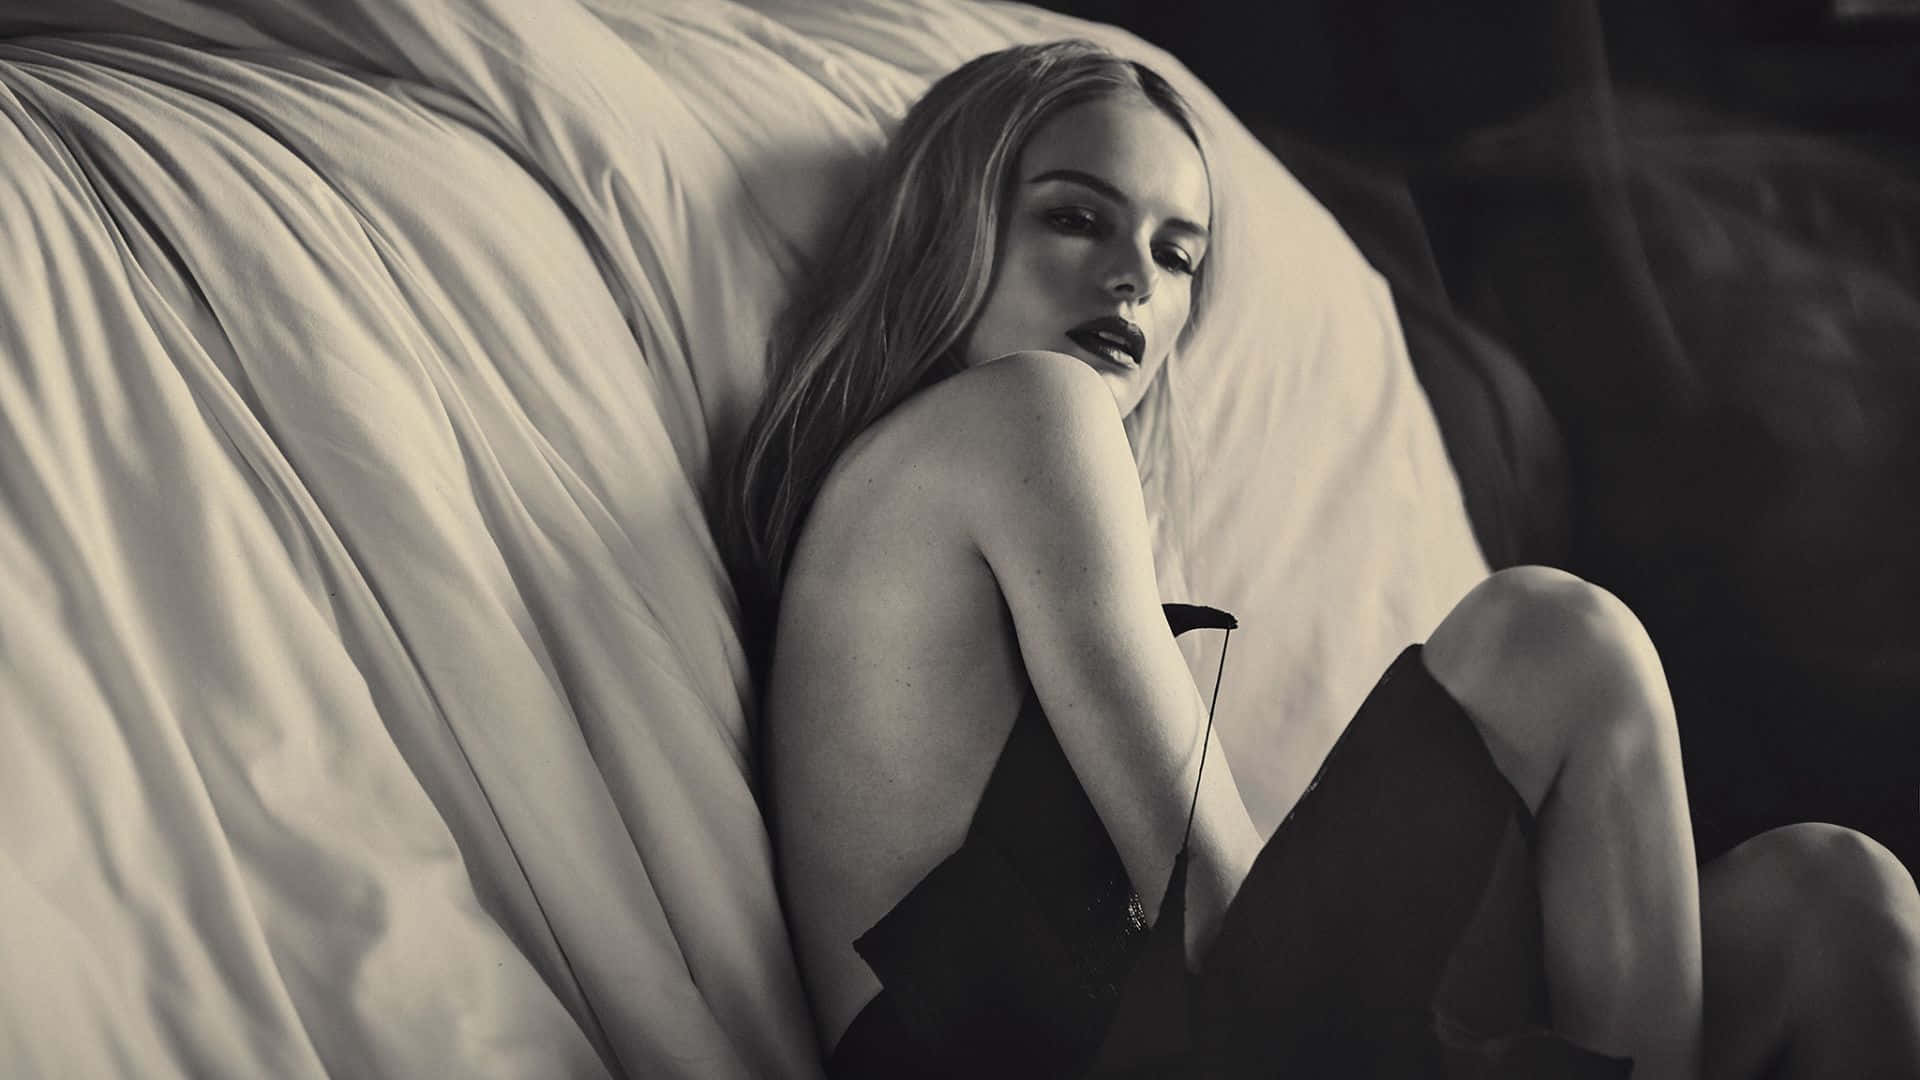 Kate Bosworth striking a pose in an elegant dress Wallpaper